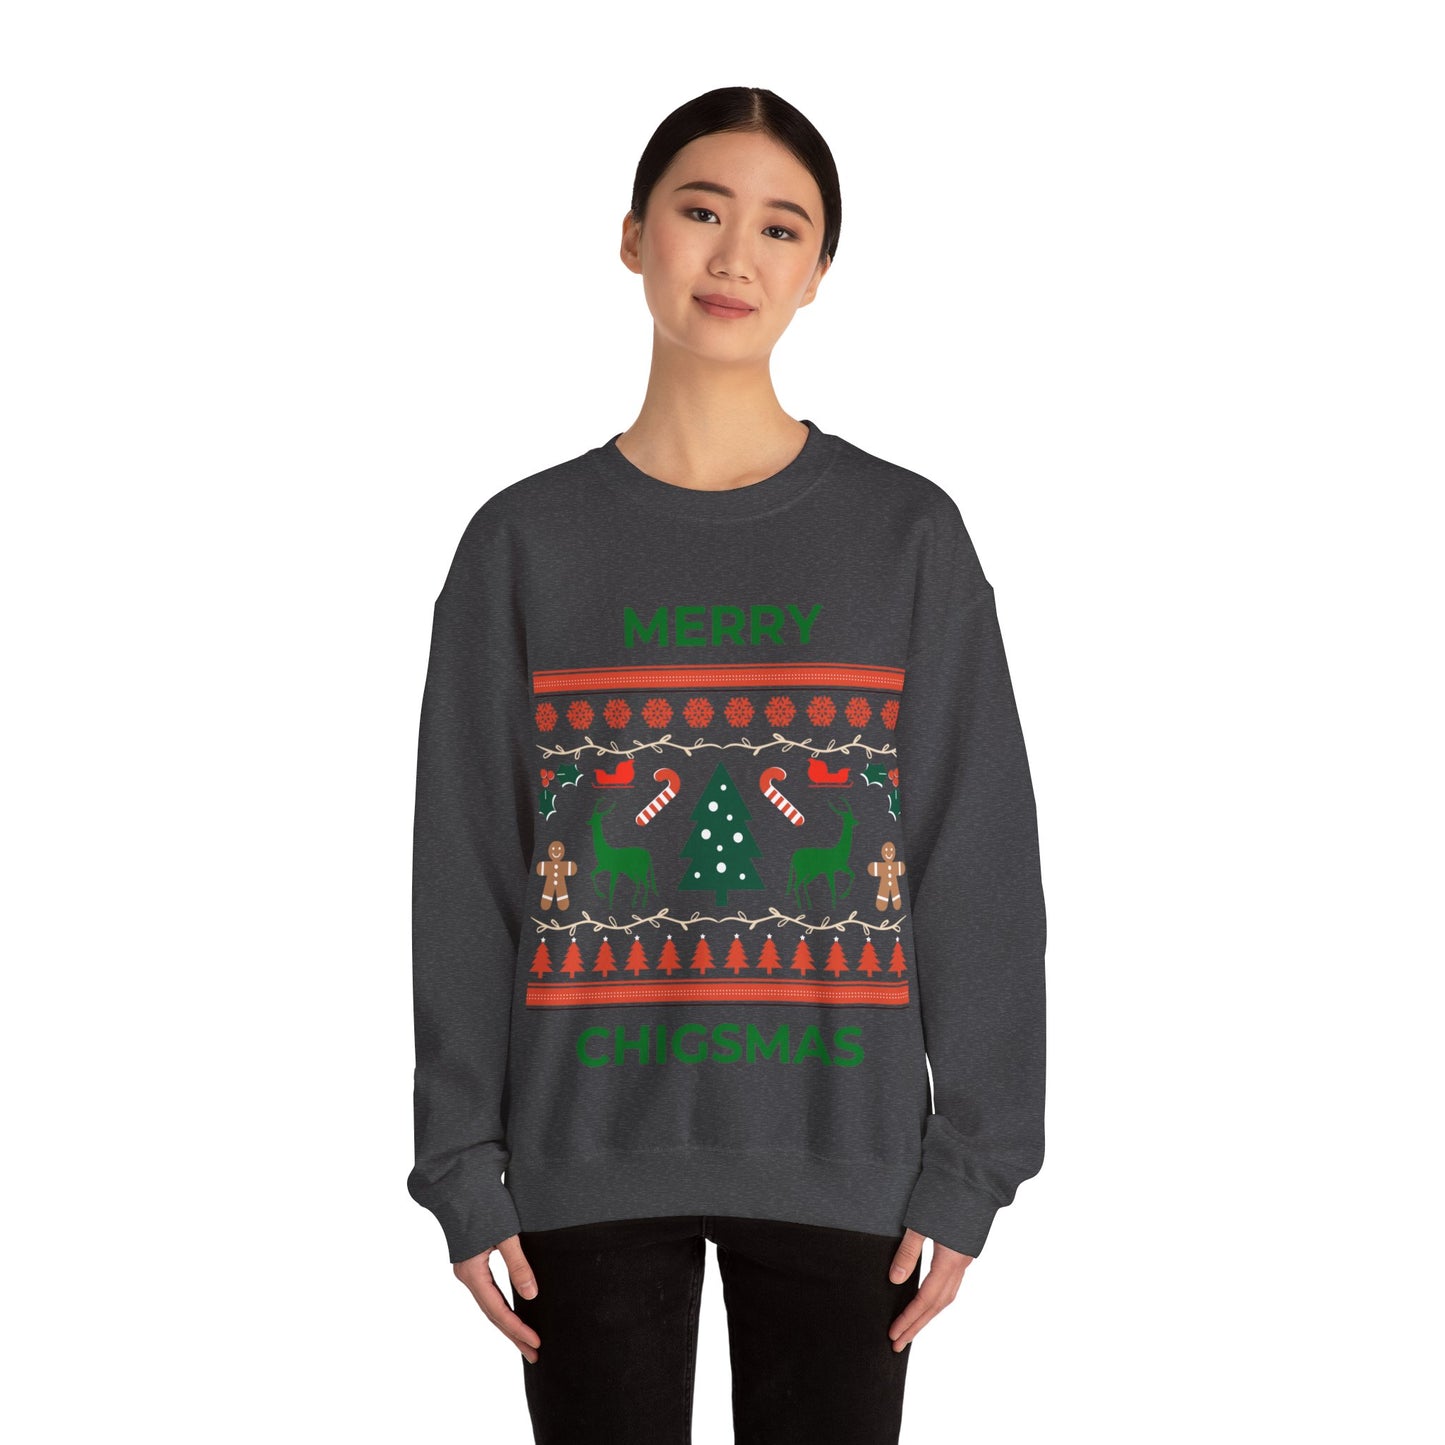 Merry Chigsmas Crewneck Sweatshirt